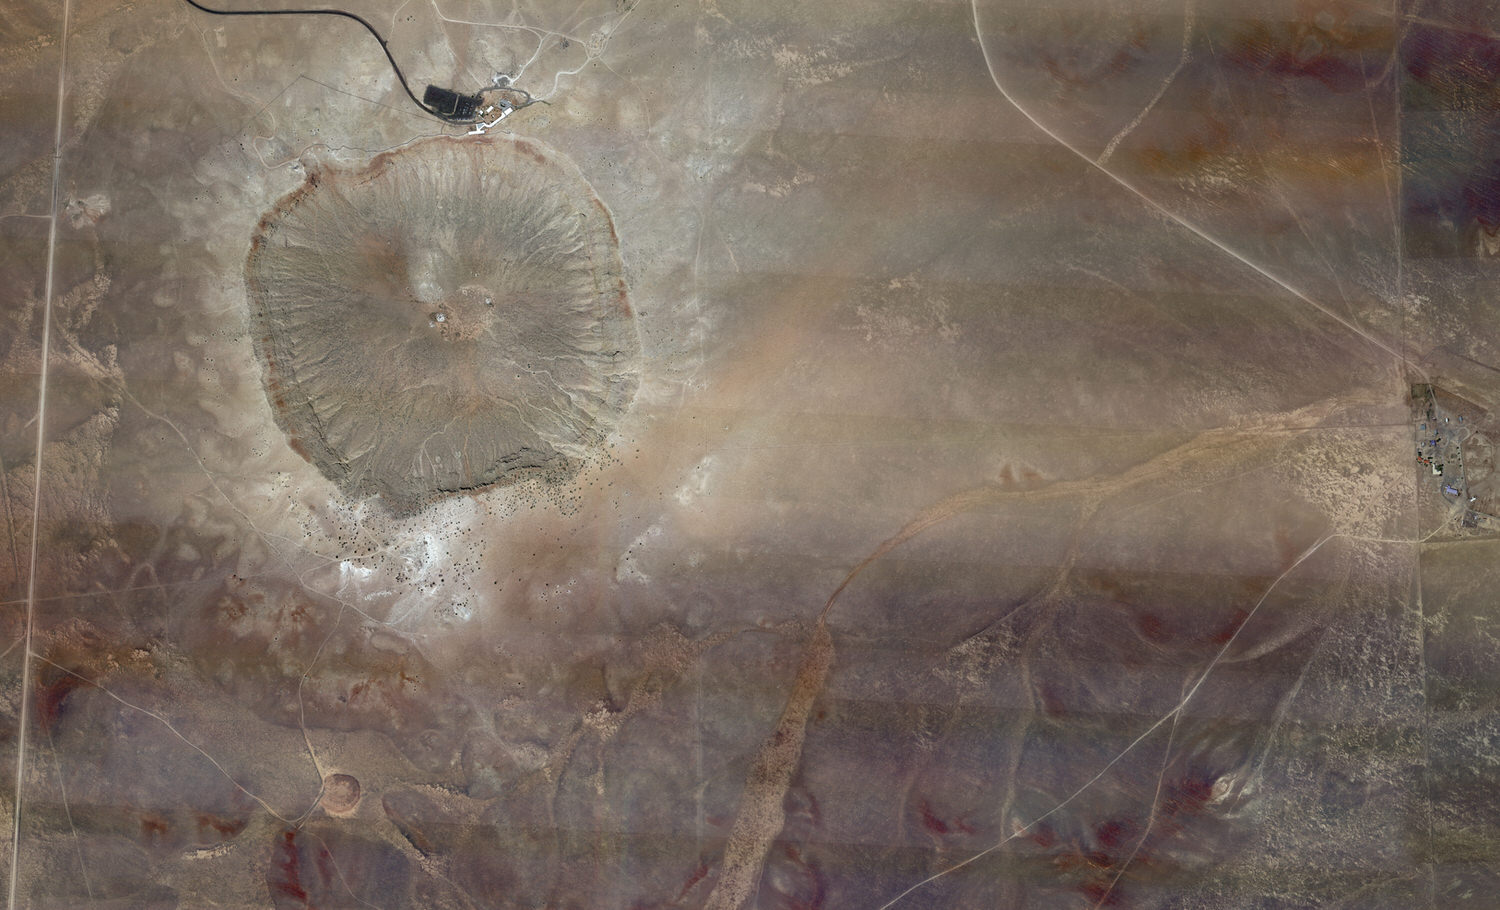  Meteor Crater, Coconino County, Arizona), 2013. Archival pigment print